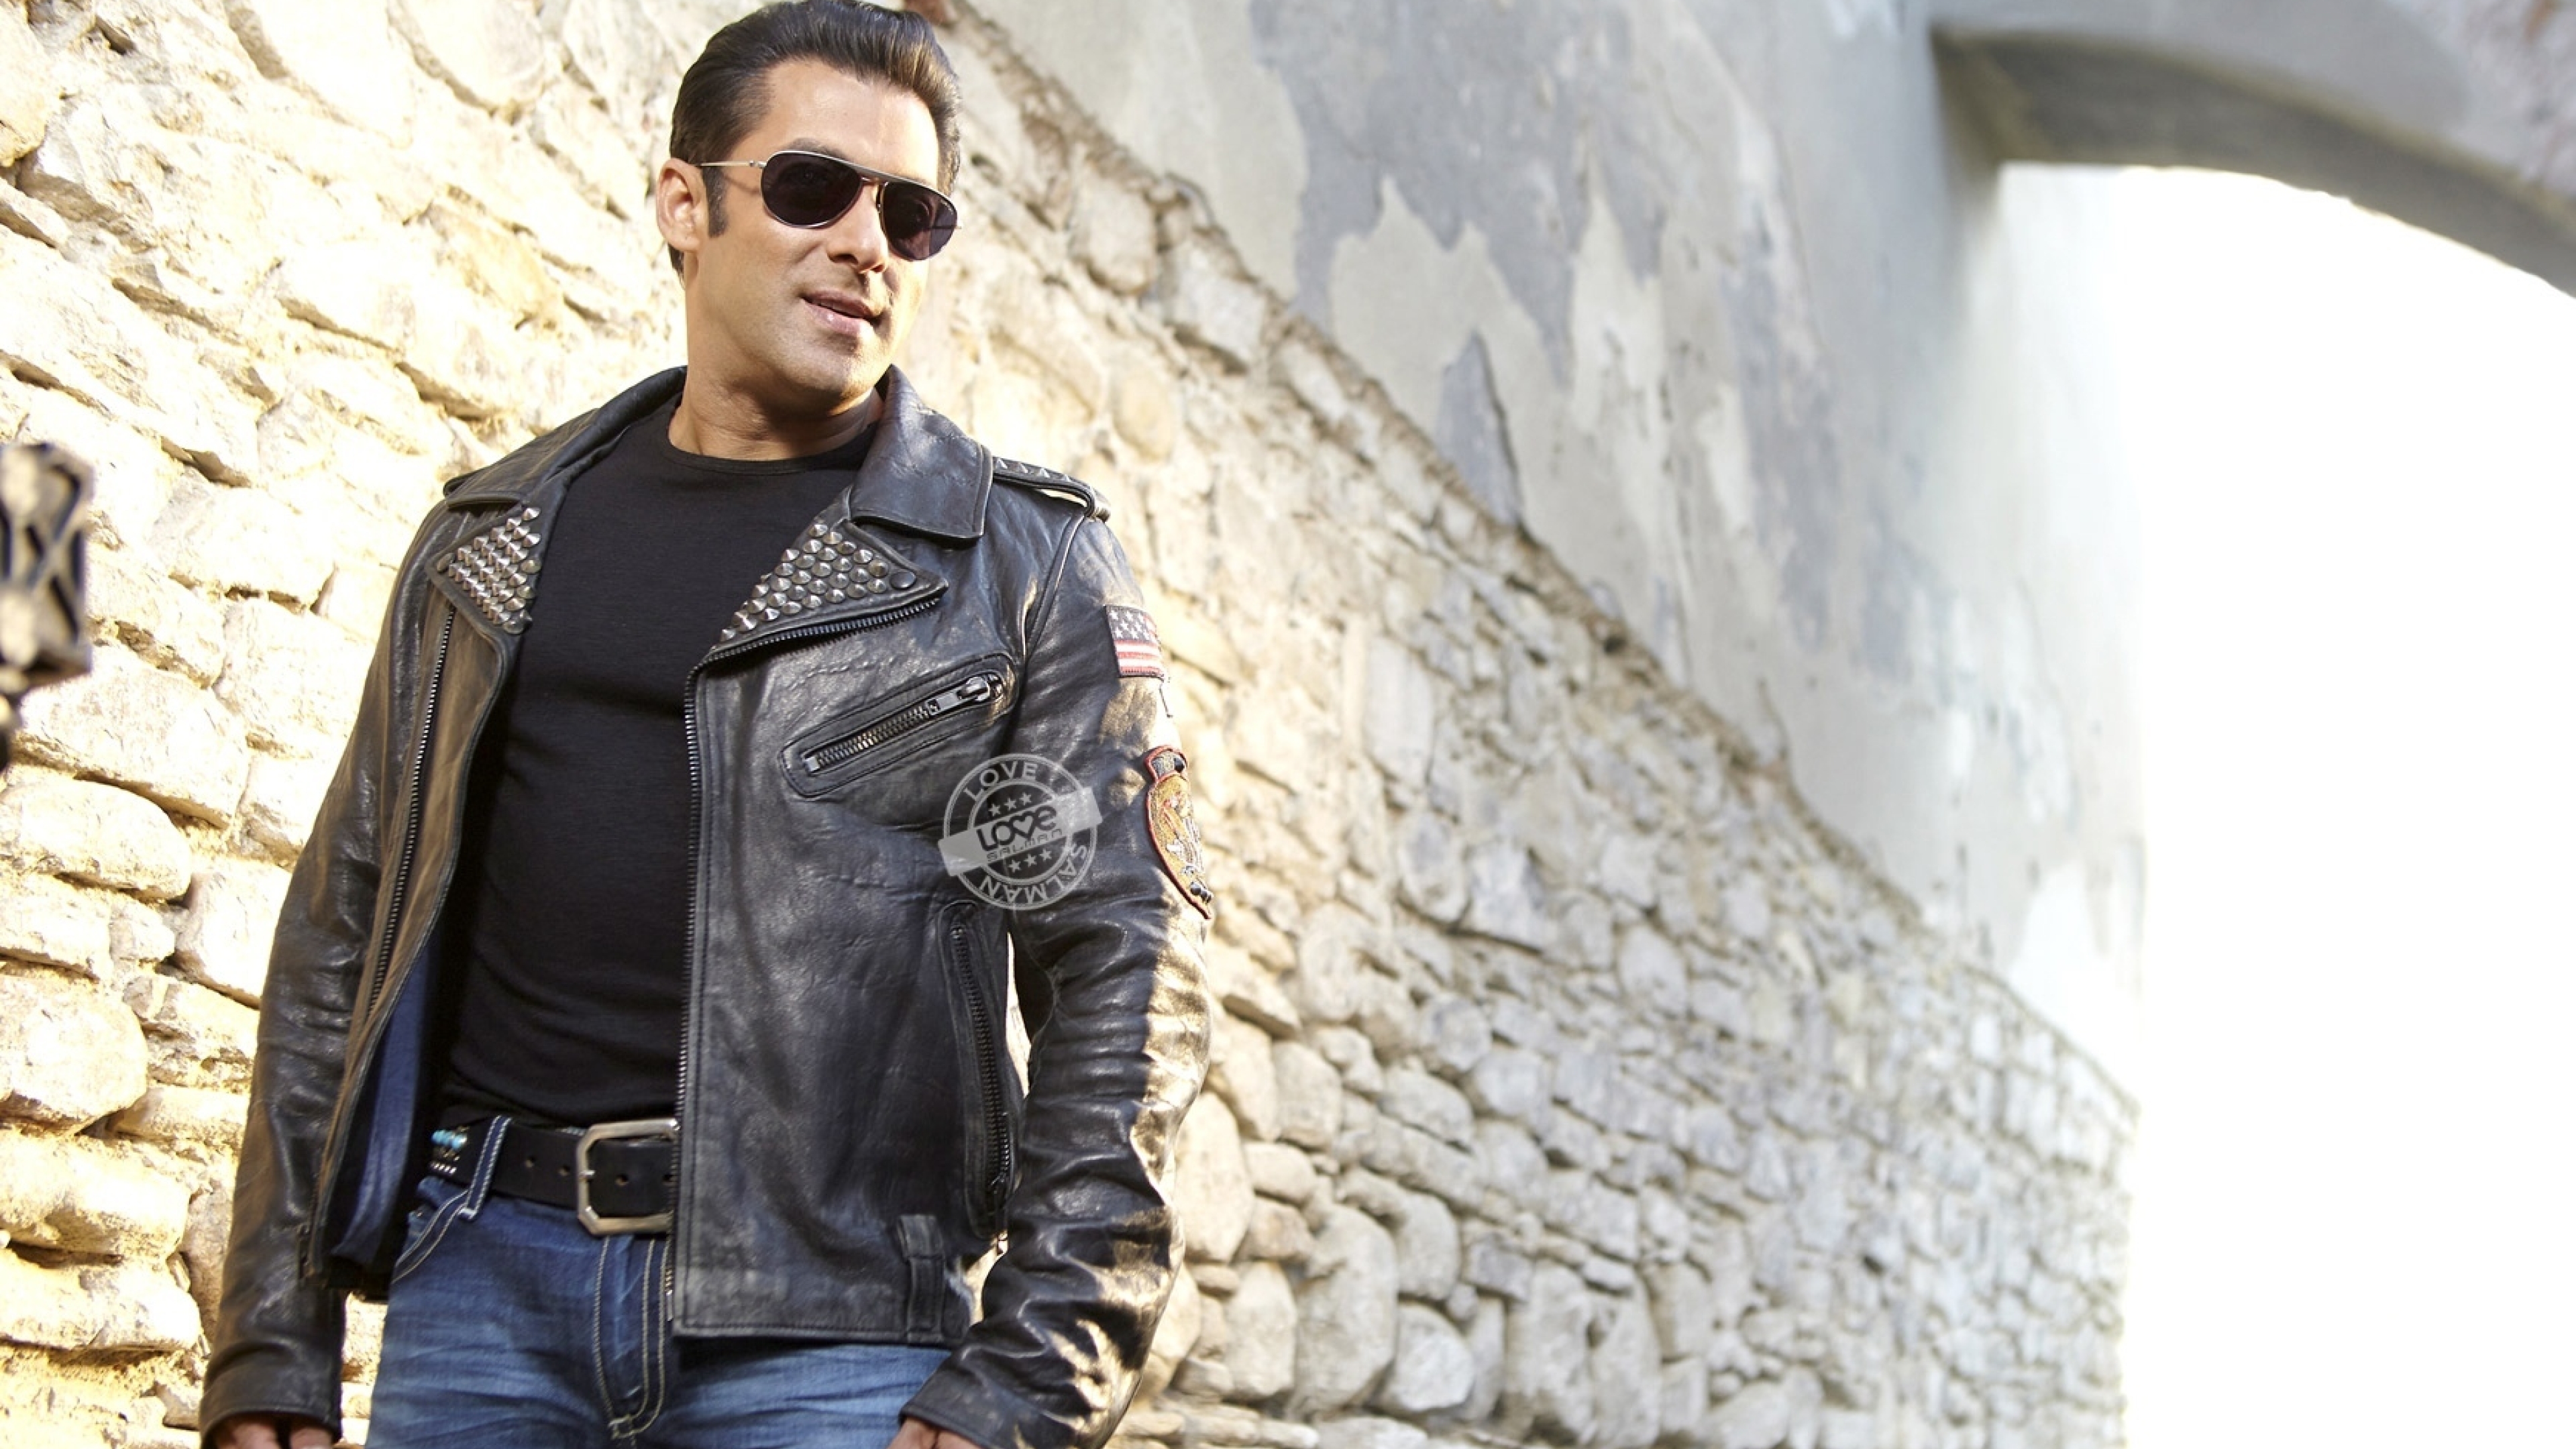 100+] Salman Khan Wallpapers | Wallpapers.com